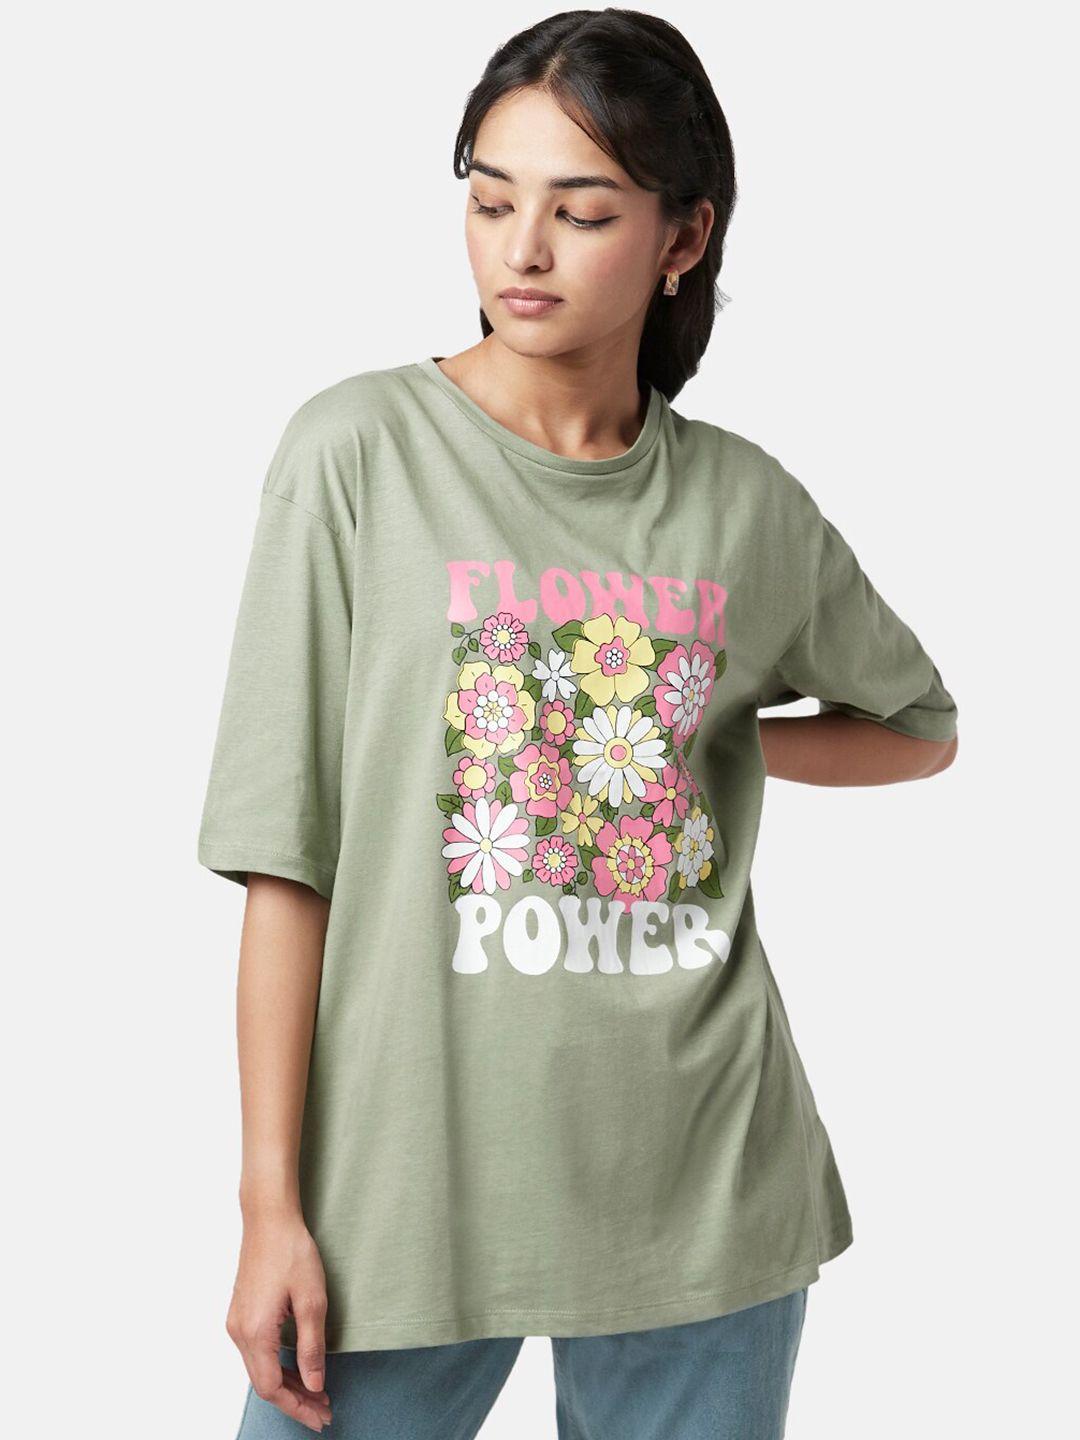 yu-by-pantaloons-women-cotton-printed-t-shirt